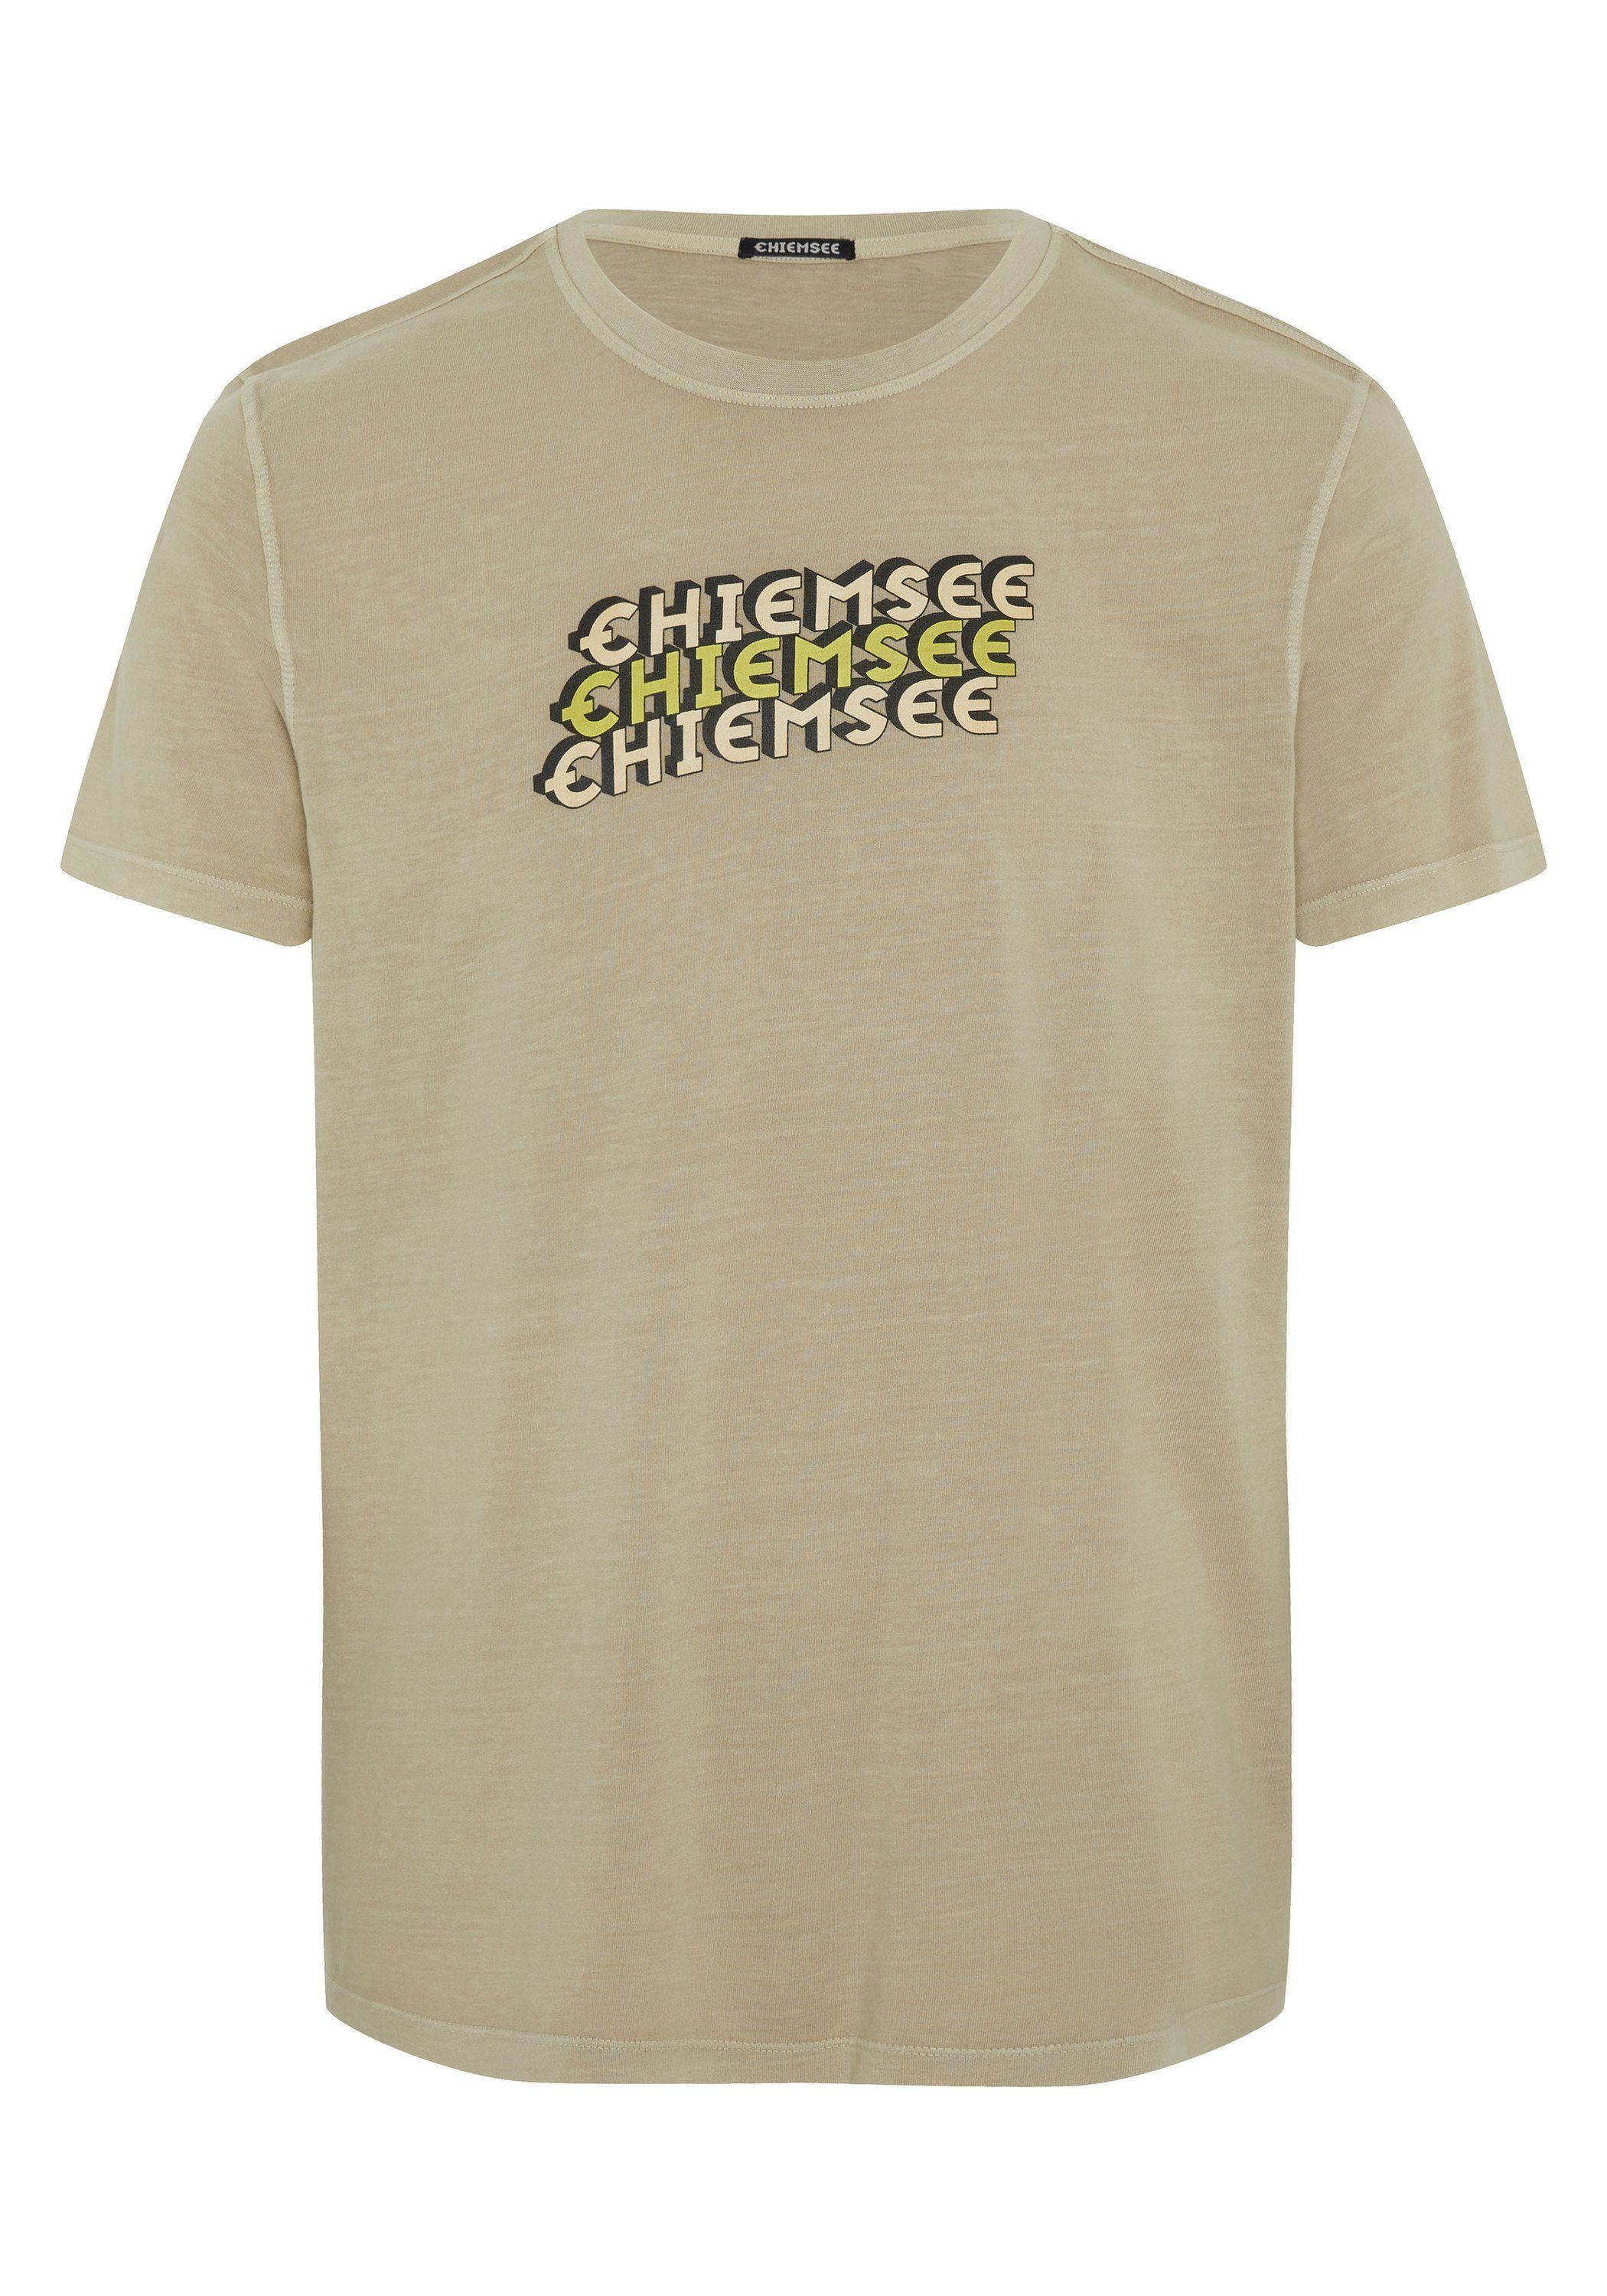 Chiemsee Print-Shirt T-Shirt aus 1, Label-Design Baumwolljersey Herren-Shirt CHIEMSEE im